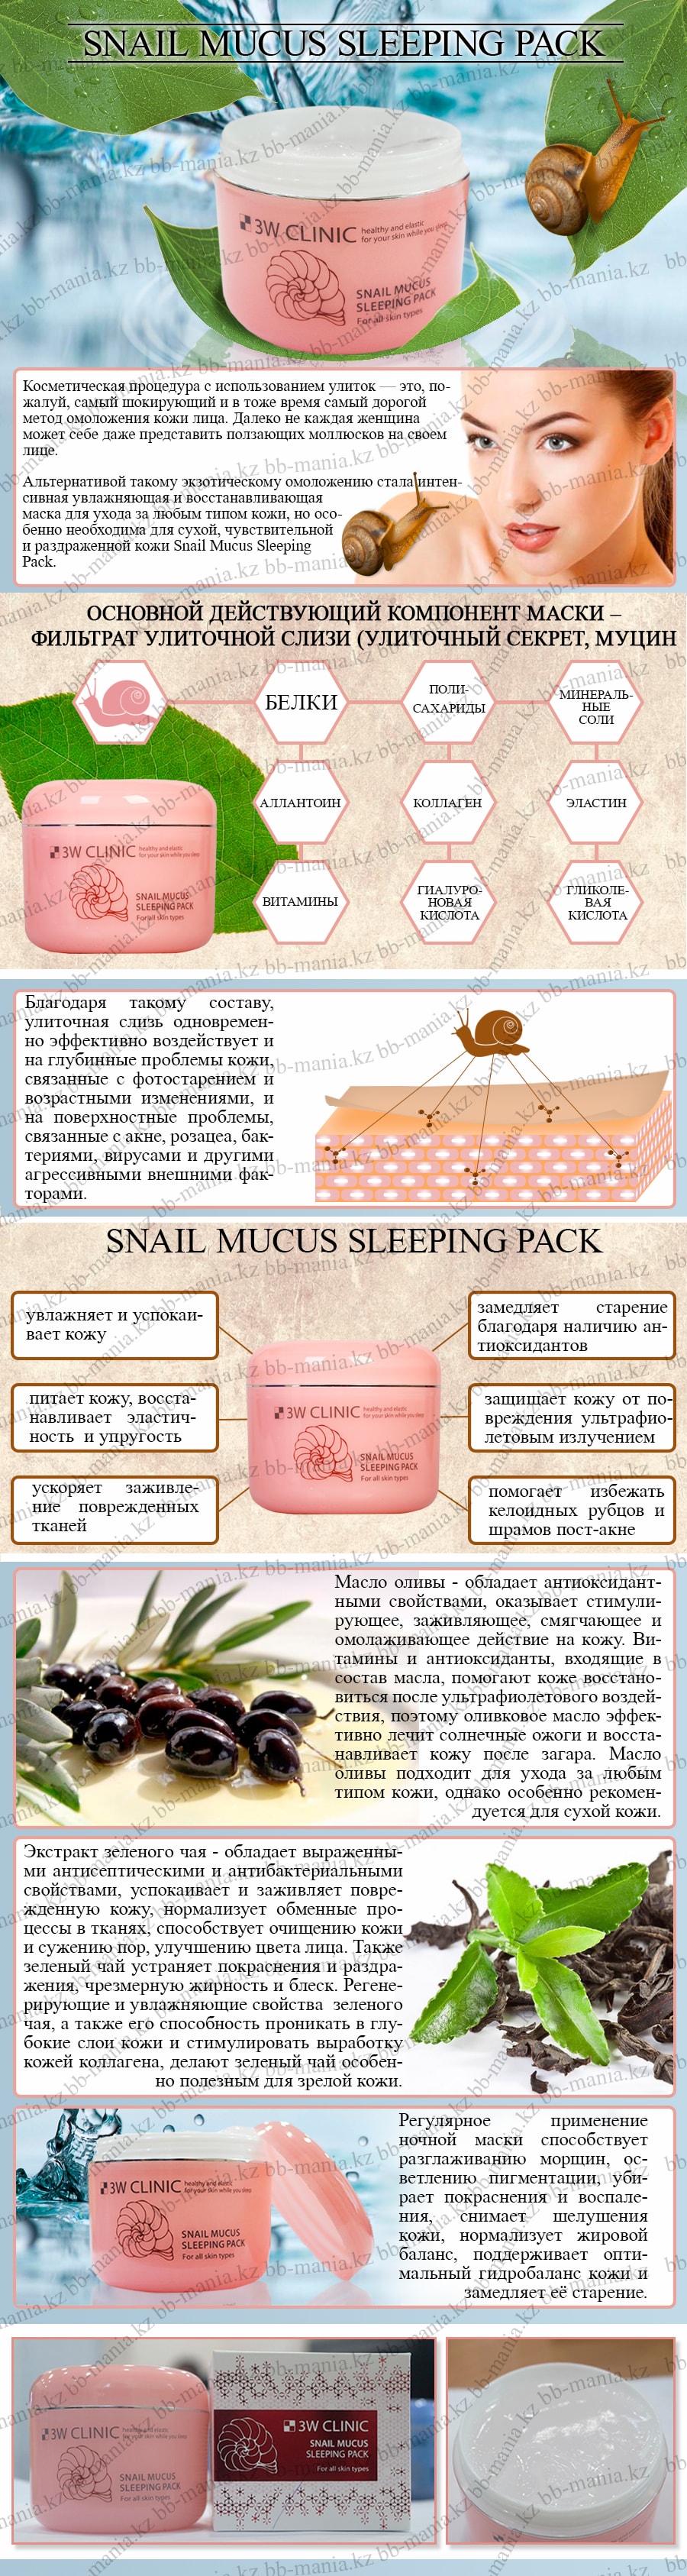 Snail Mucus Sleeping Pack [3W CLINIC] - Картинка